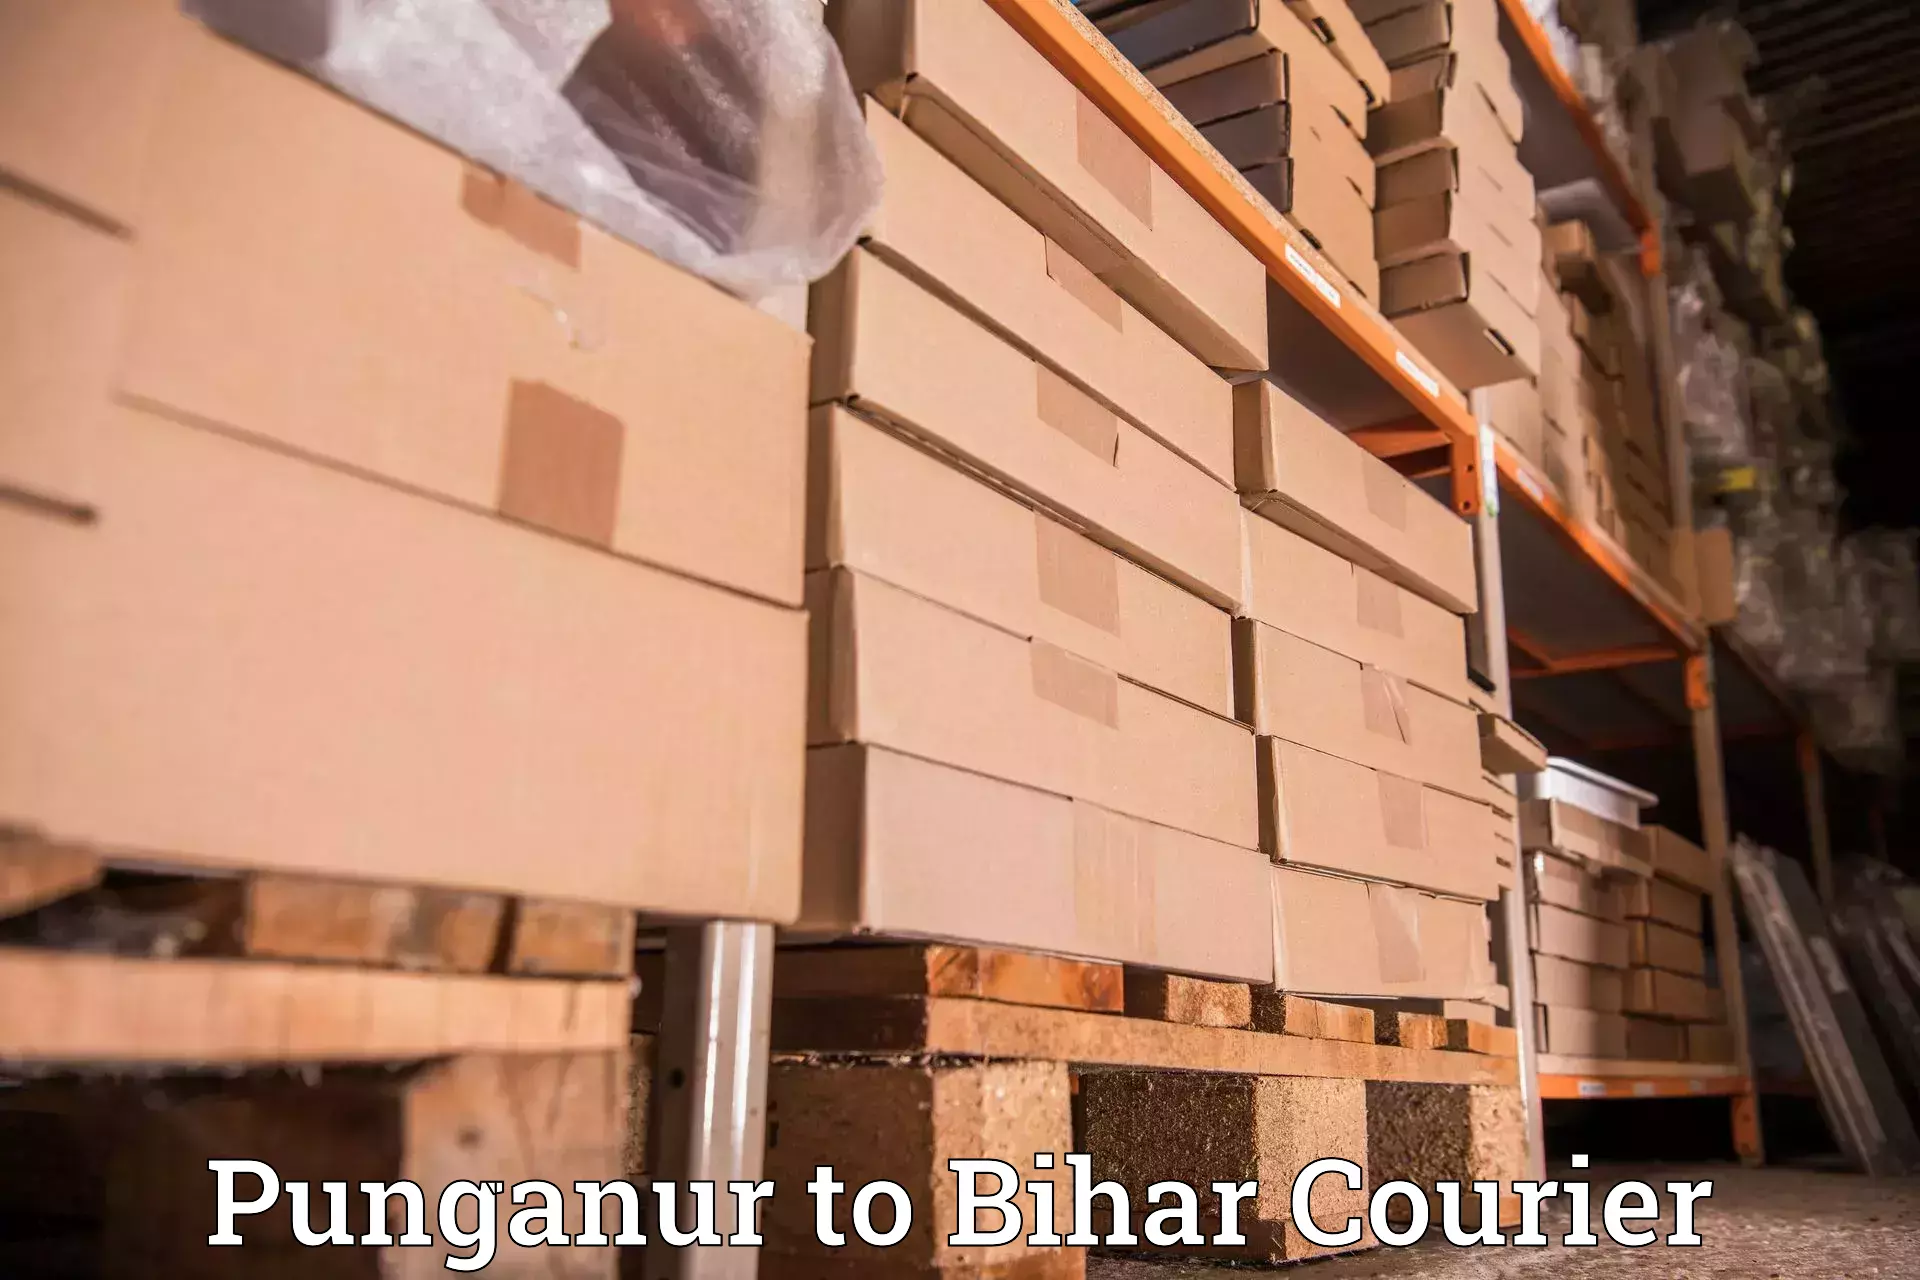 Courier service innovation Punganur to Wazirganj